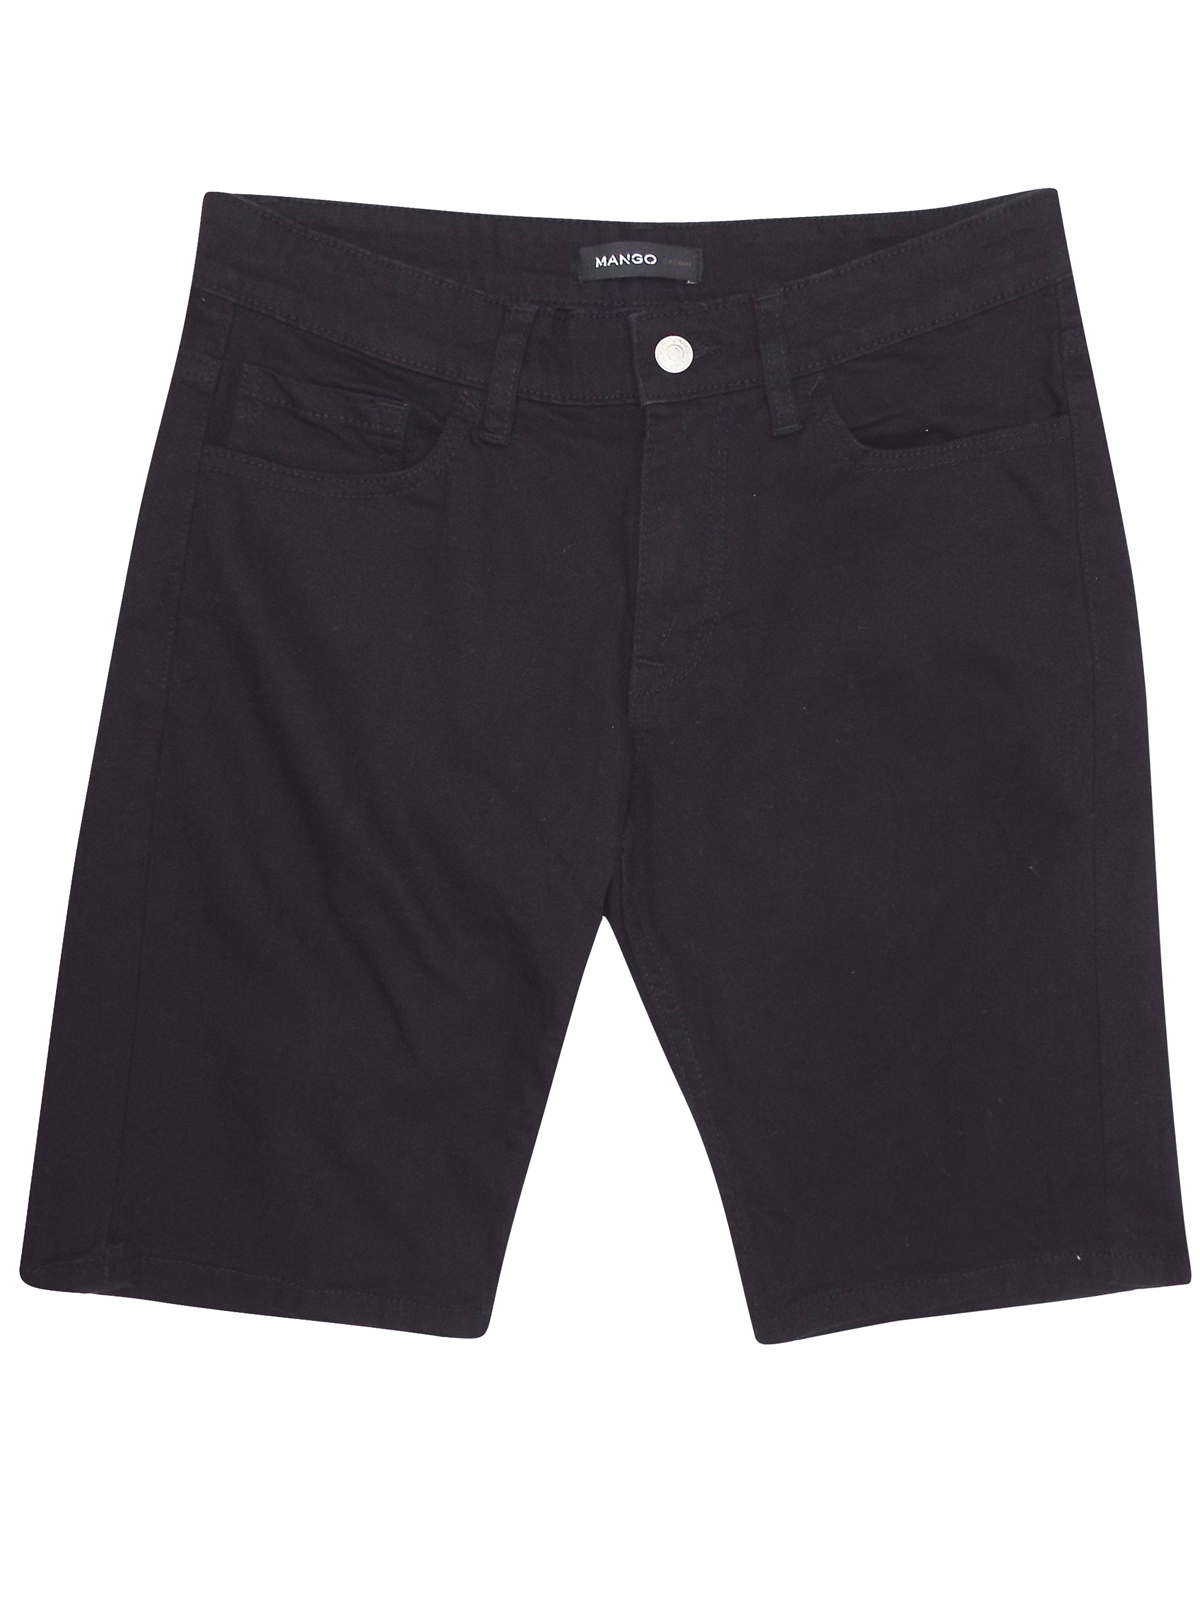 M4ngo ASSORTED Cotton Rich 5-Pocket Denim Shorts - Waist Size 30 to 36